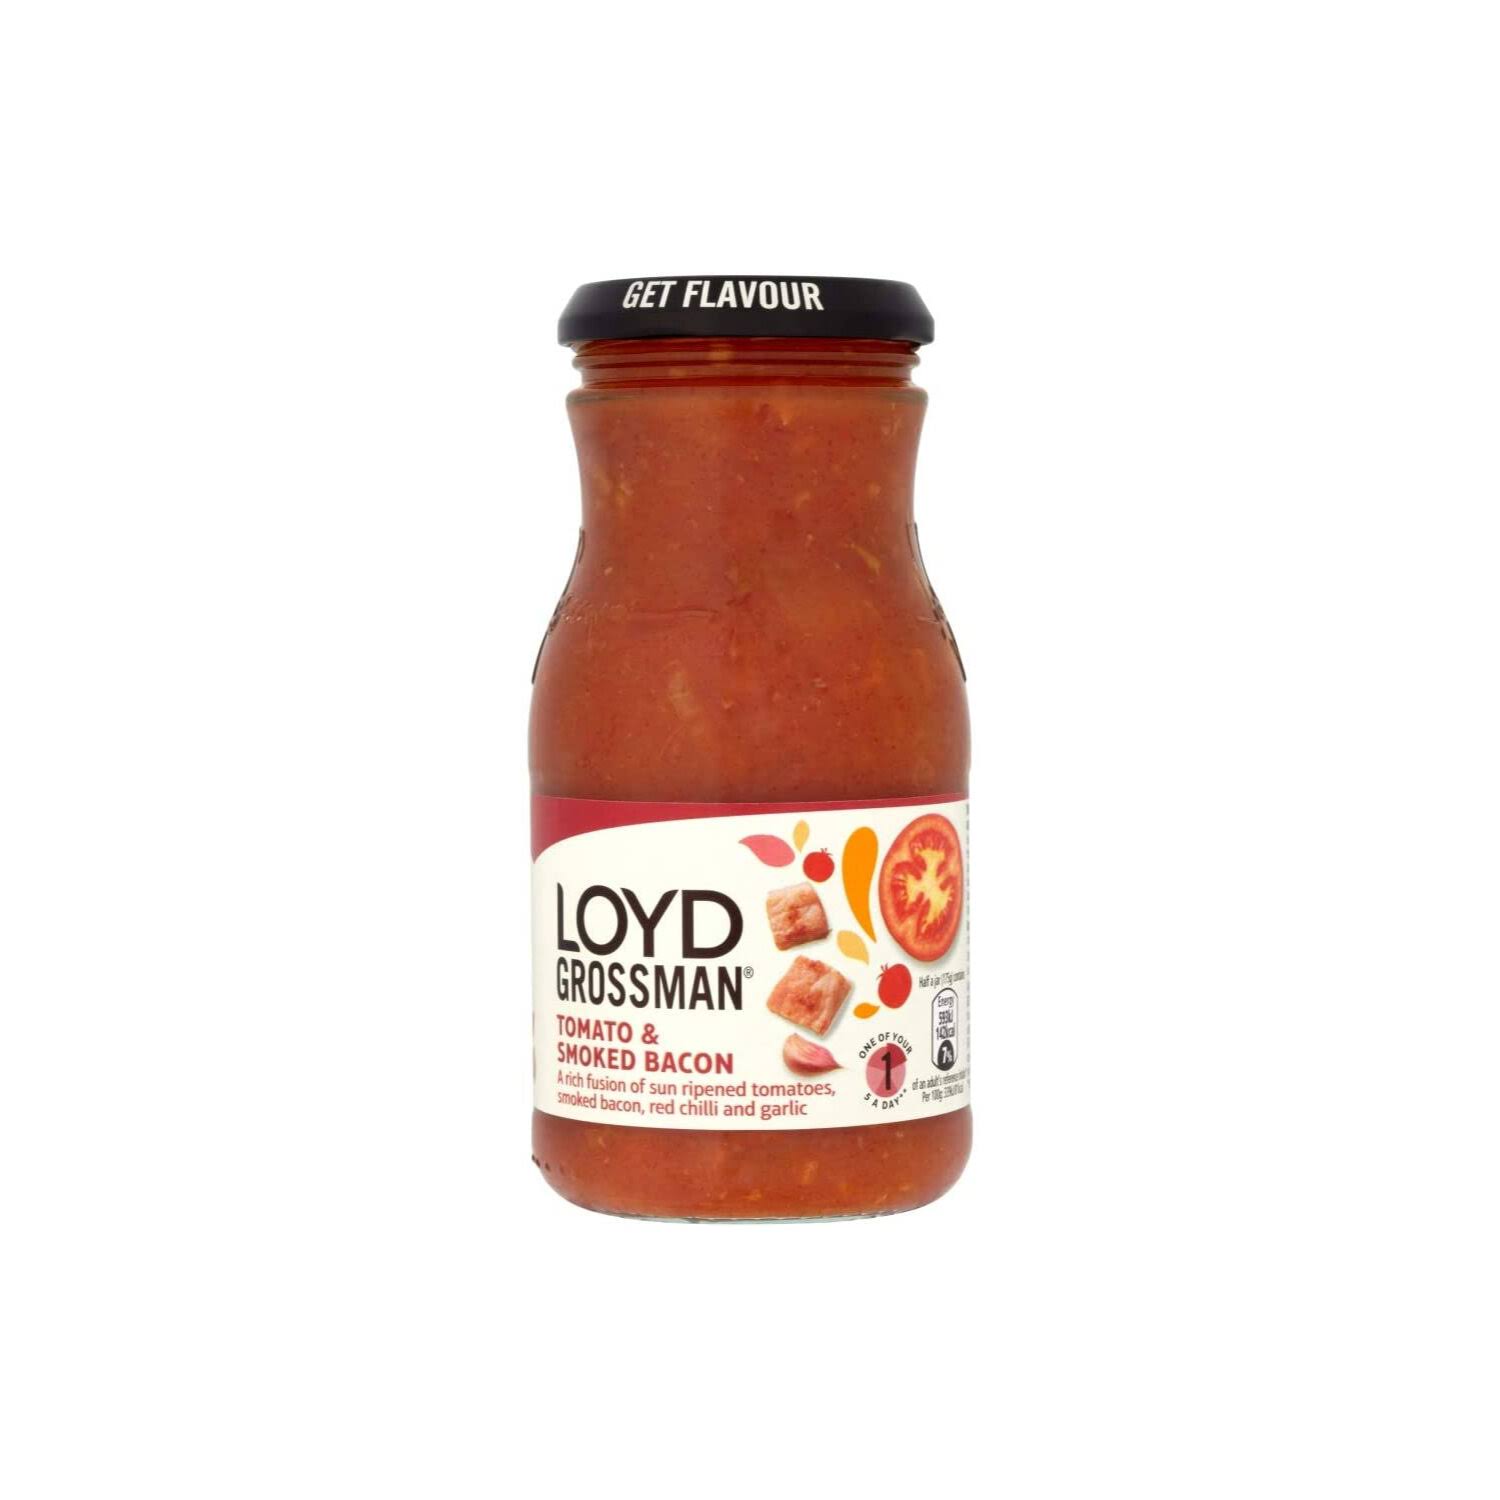 Loyd Grossman Tomato and Smoked Bacon Pasta Sauce - 350g